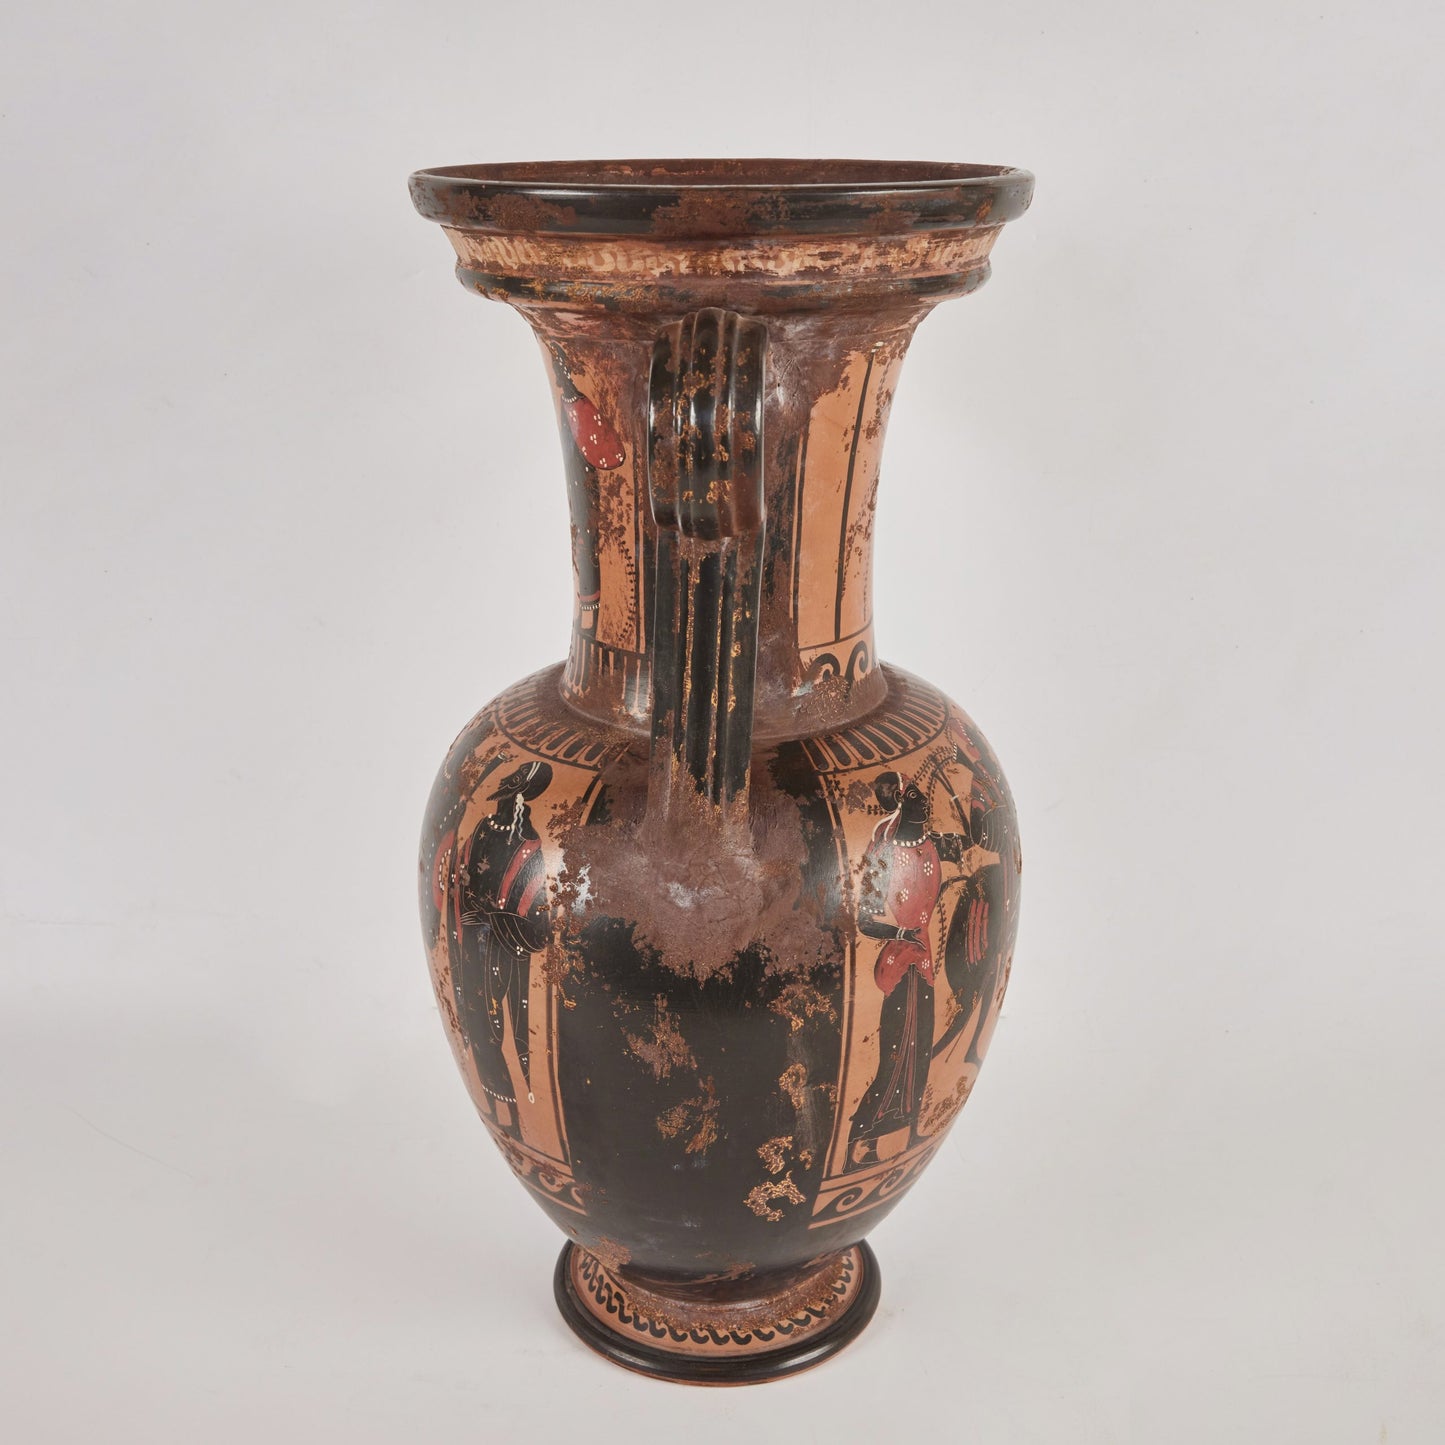 Grand Tour Terracotta Amphora Jar